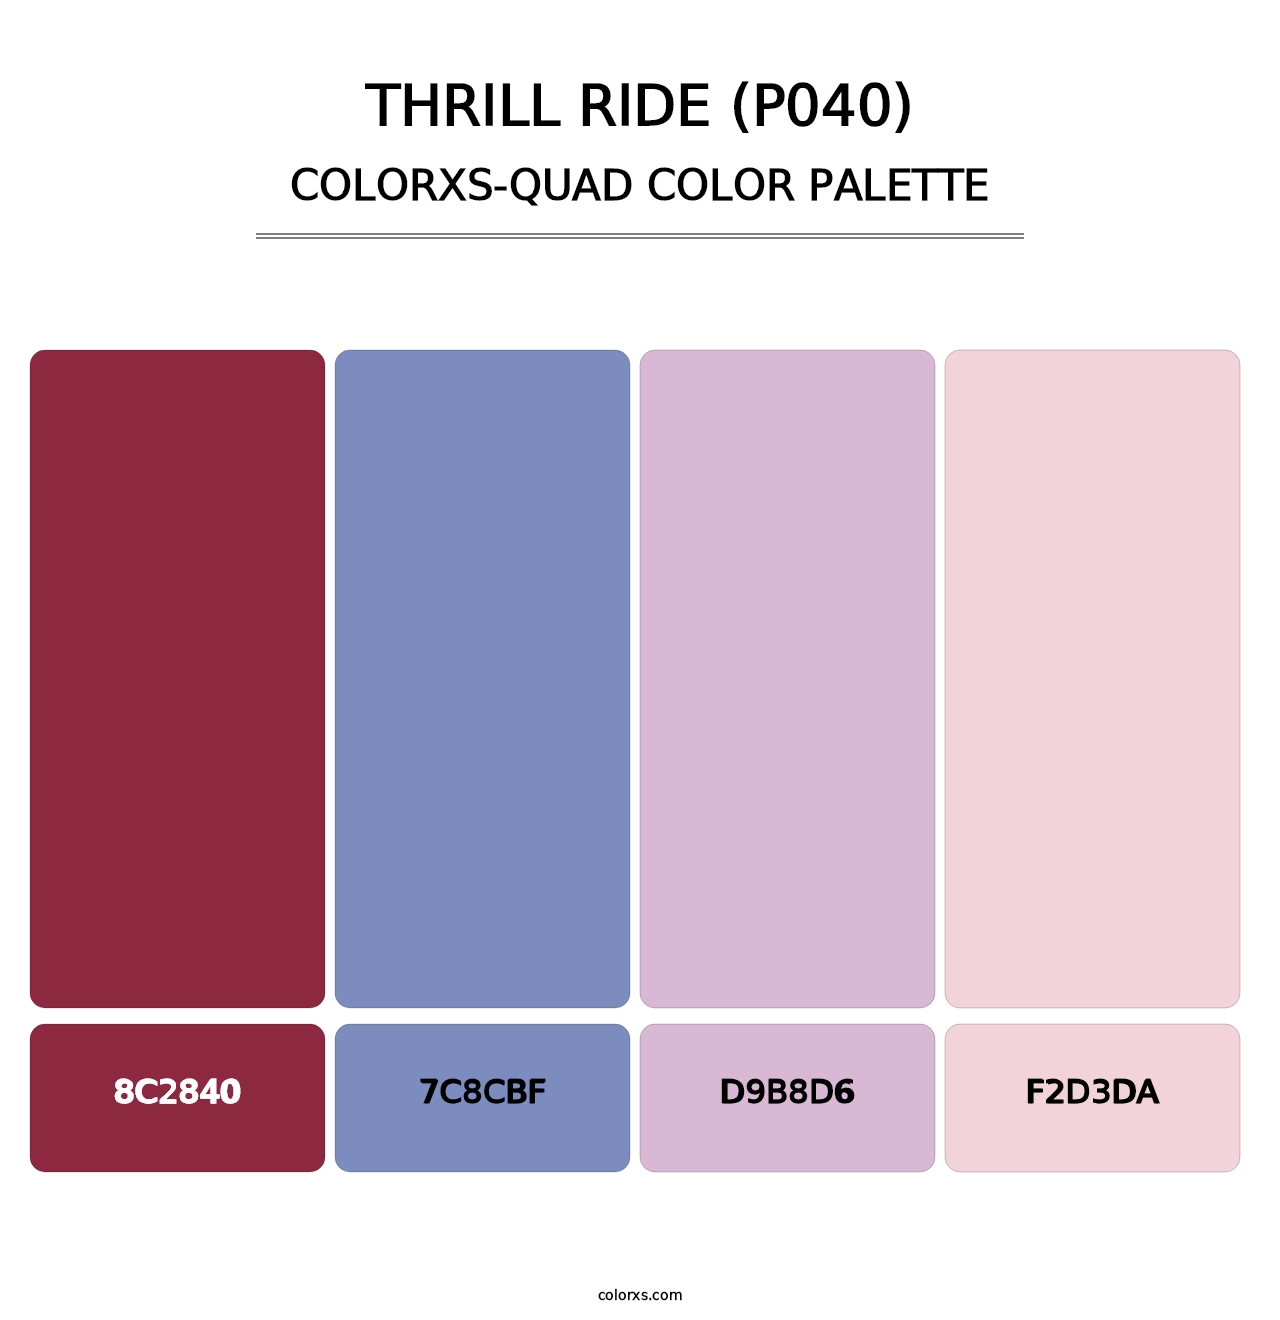 Thrill Ride (P040) - Colorxs Quad Palette